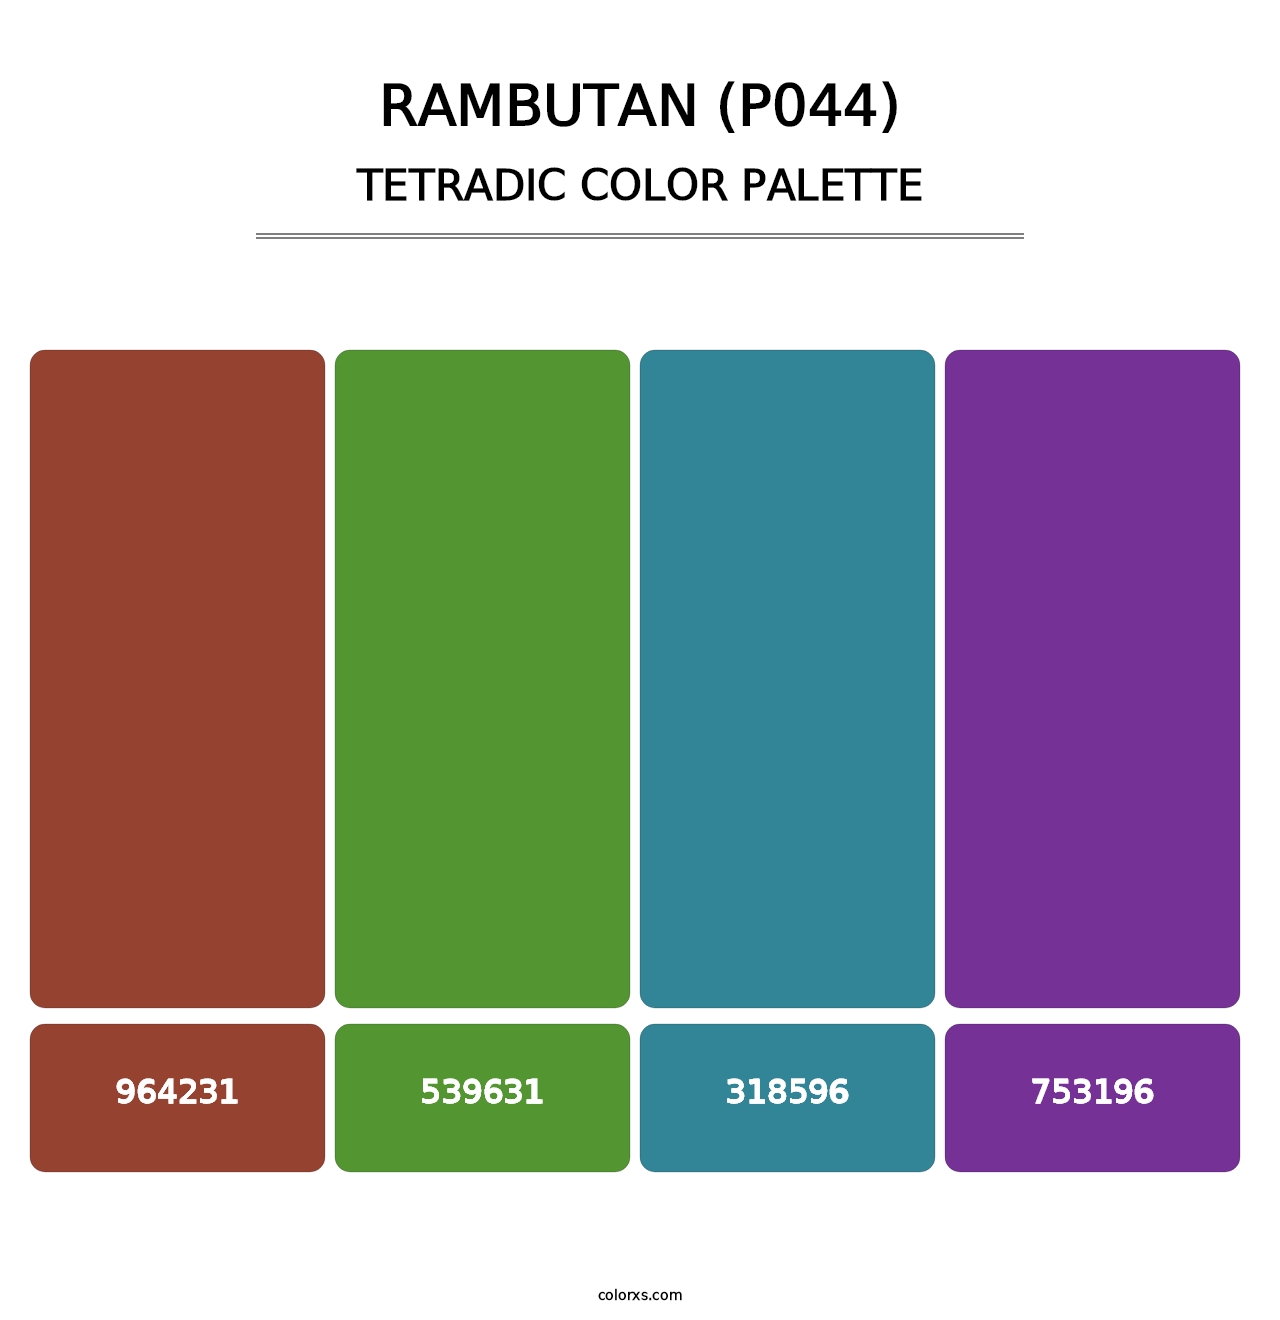 Rambutan (P044) - Tetradic Color Palette